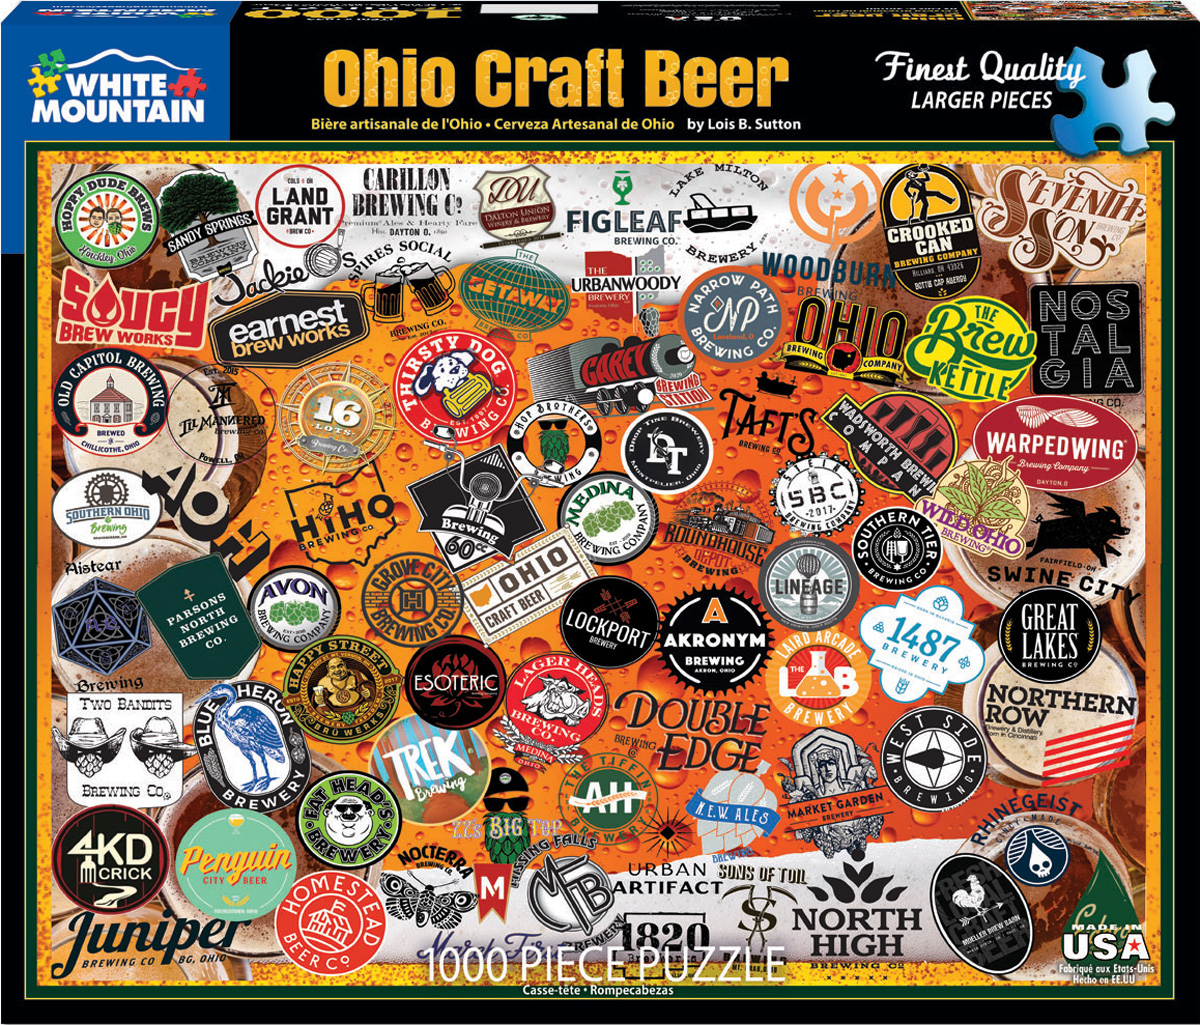 Ohio Craft Beer